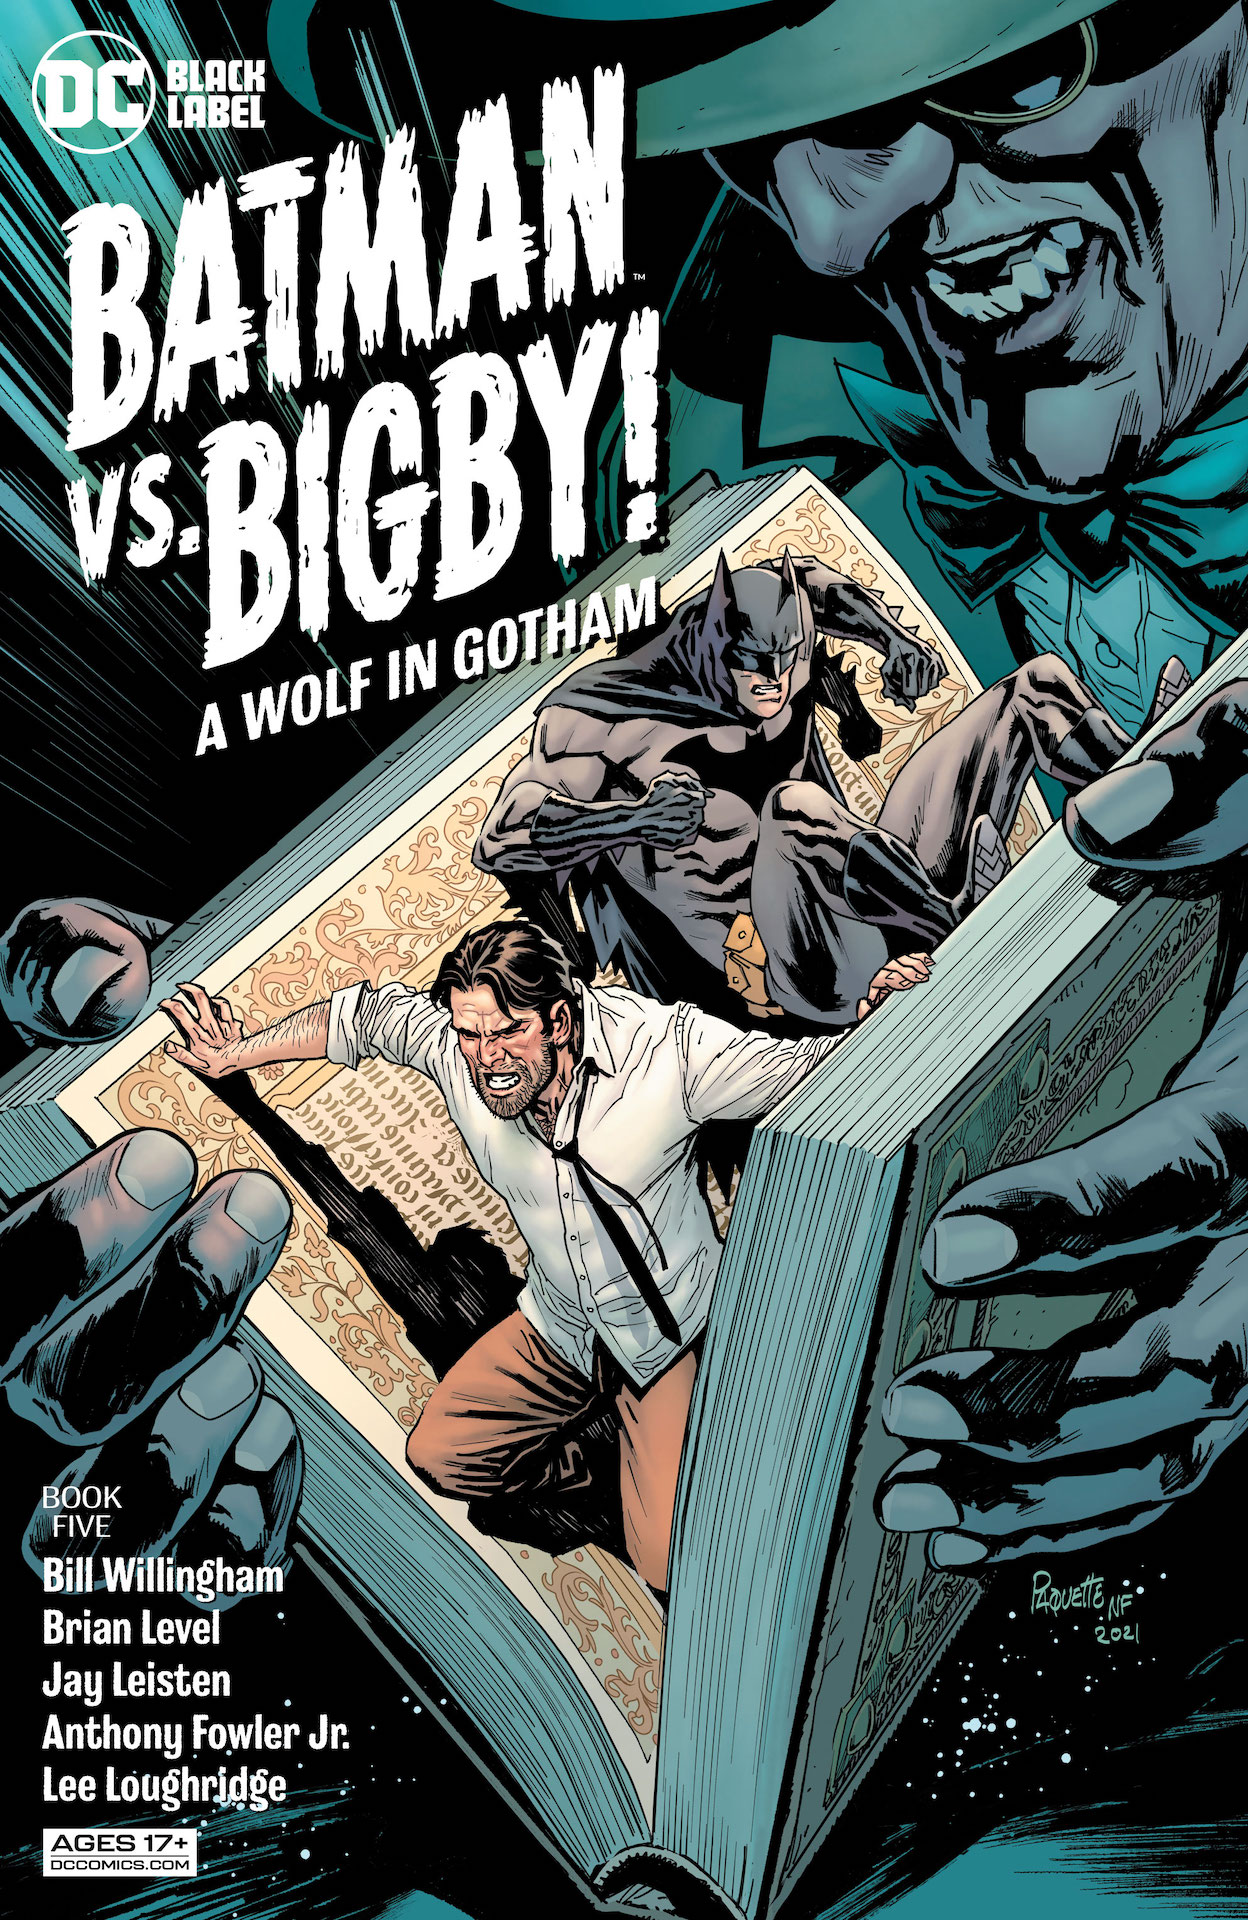 DC Preview: Batman Vs. Bigby! A Wolf In Gotham #5